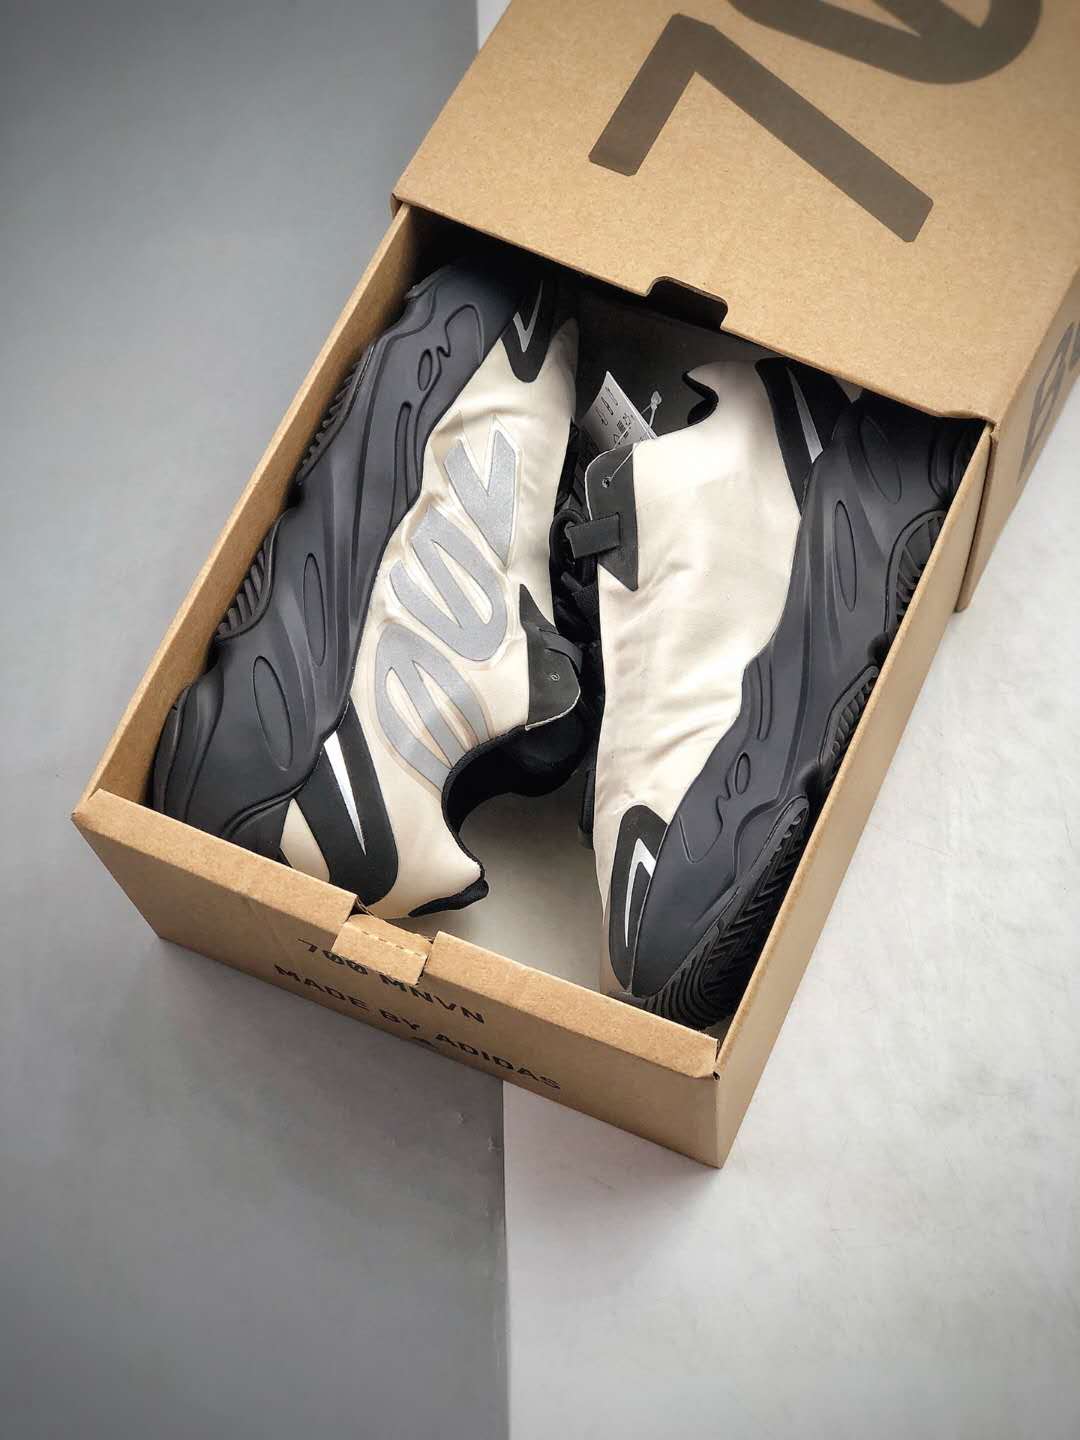 Adidas Yeezy Boost 700 MNVN 'Bone' FY3729 - Shop the Latest Release